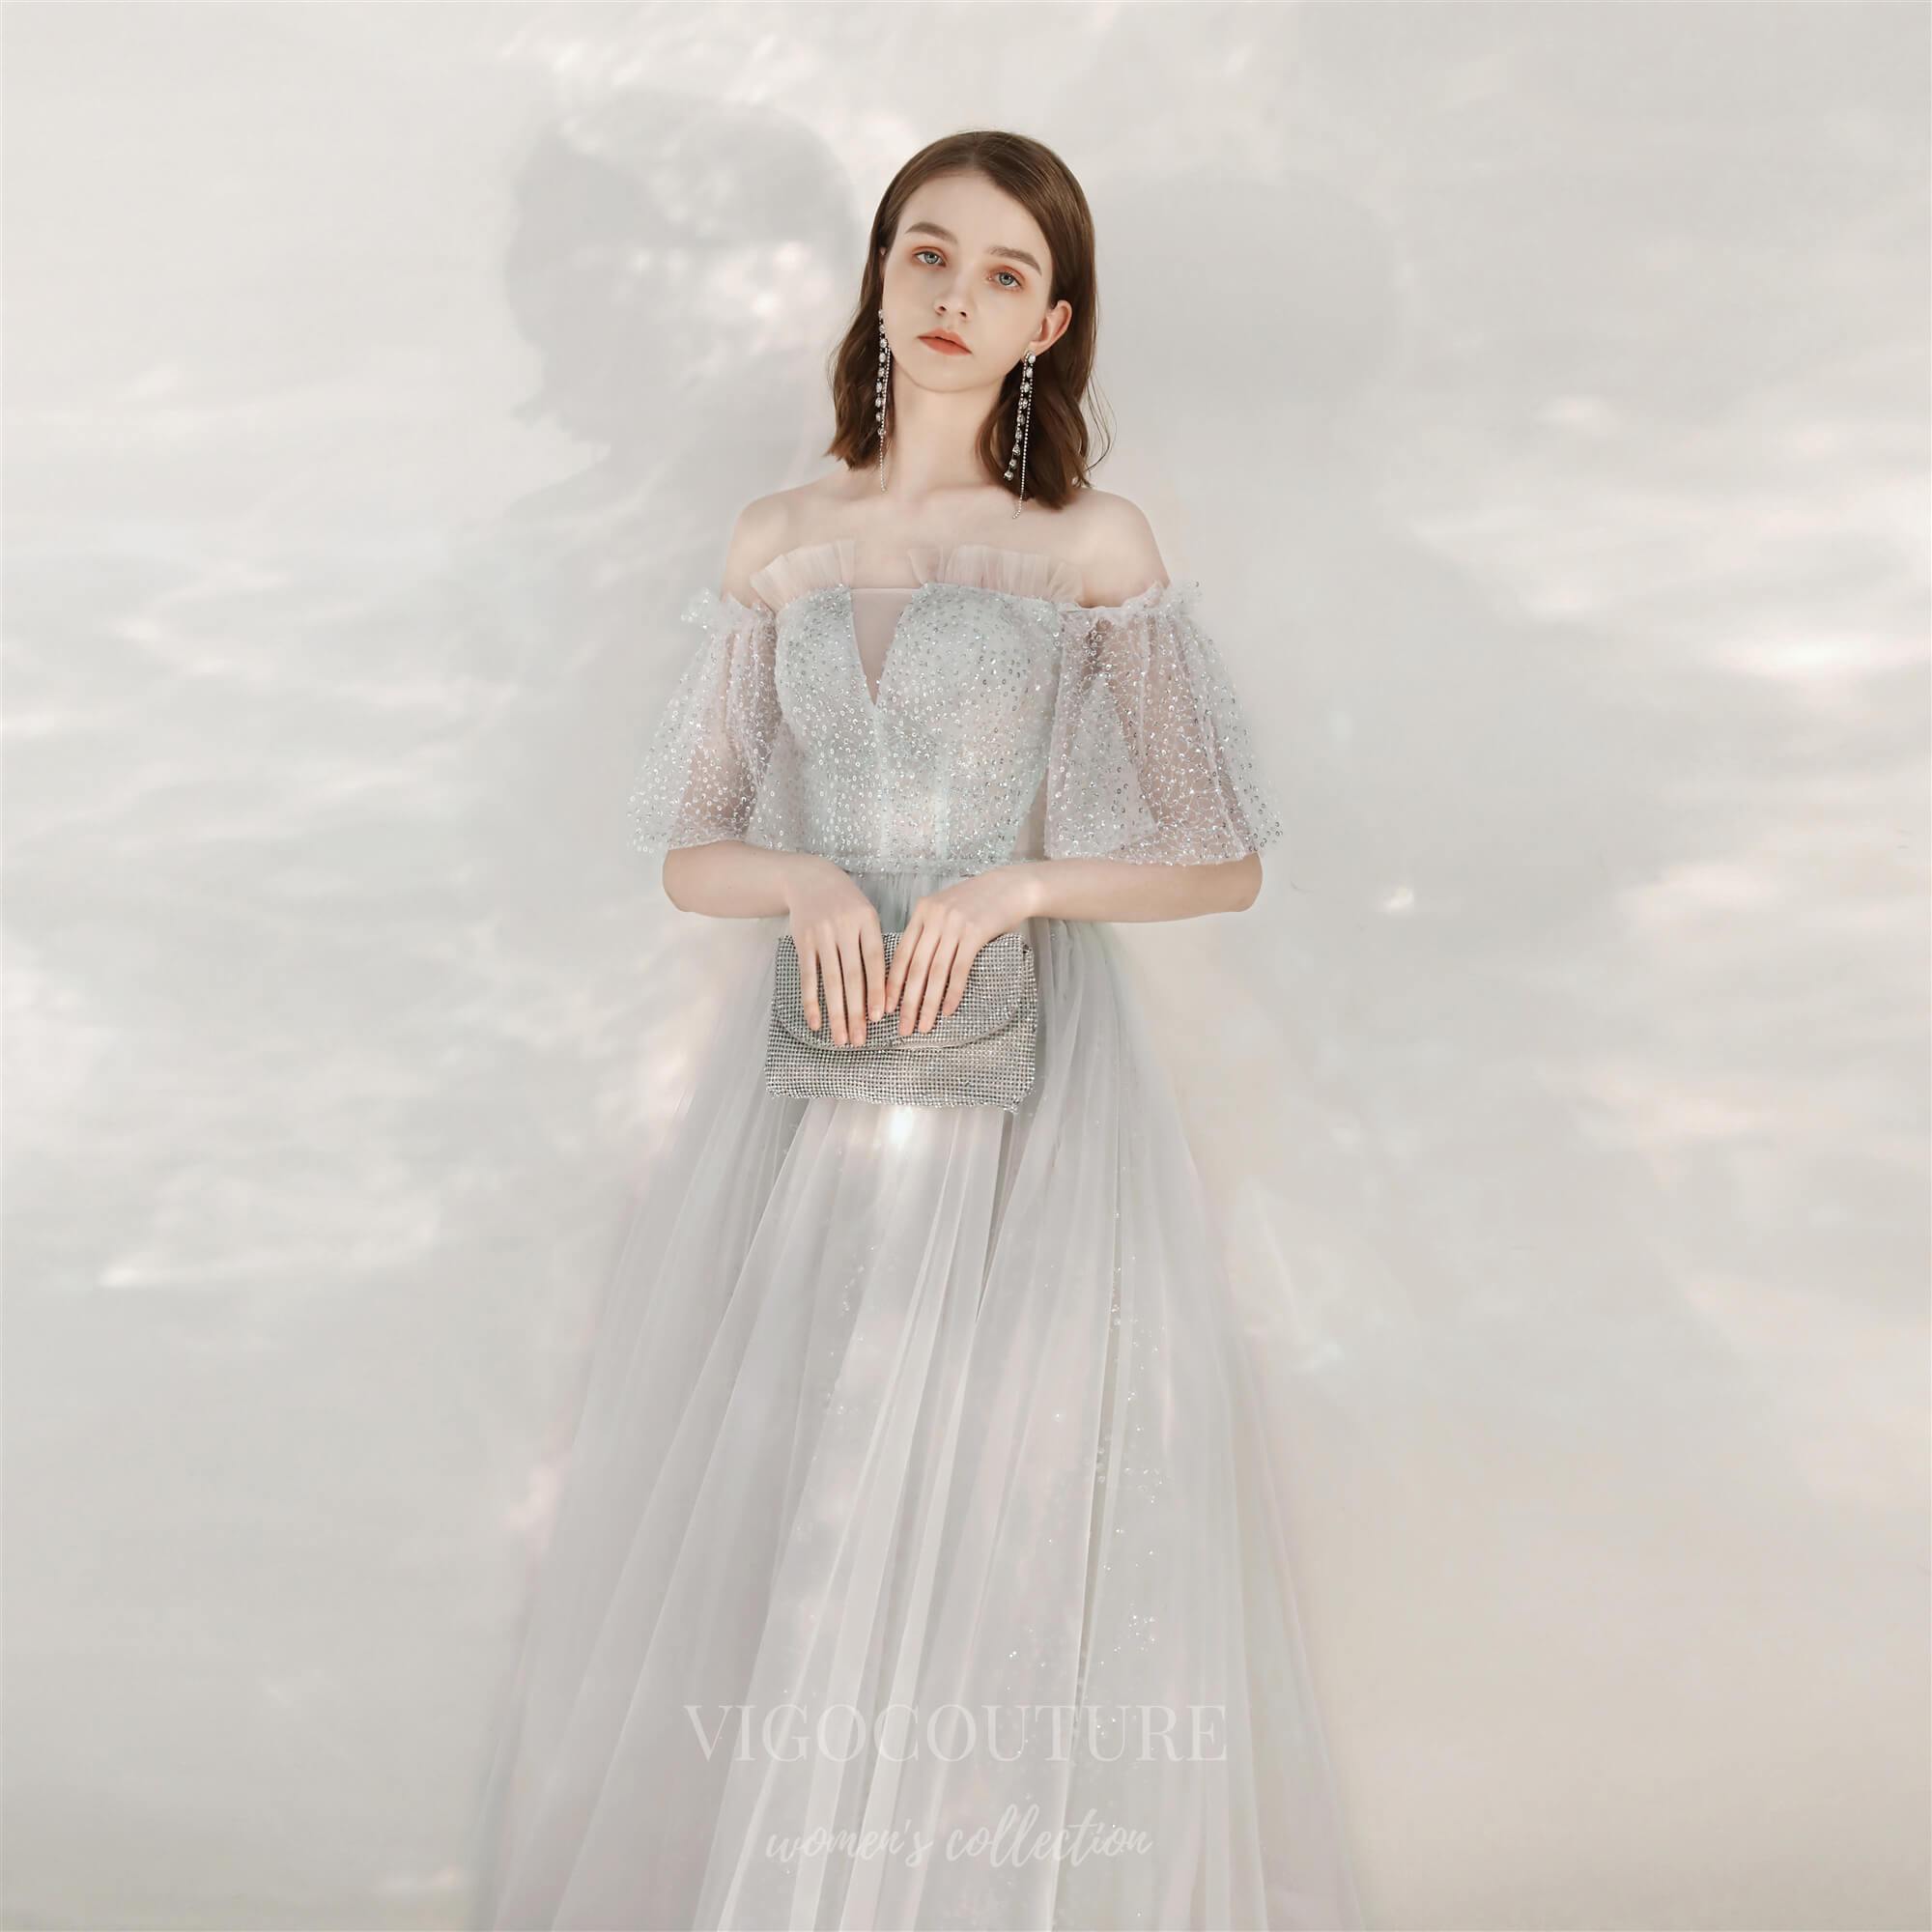 vigocouture-Ivory Beaded Off the Shoulder Prom Dress 20691-Prom Dresses-vigocouture-